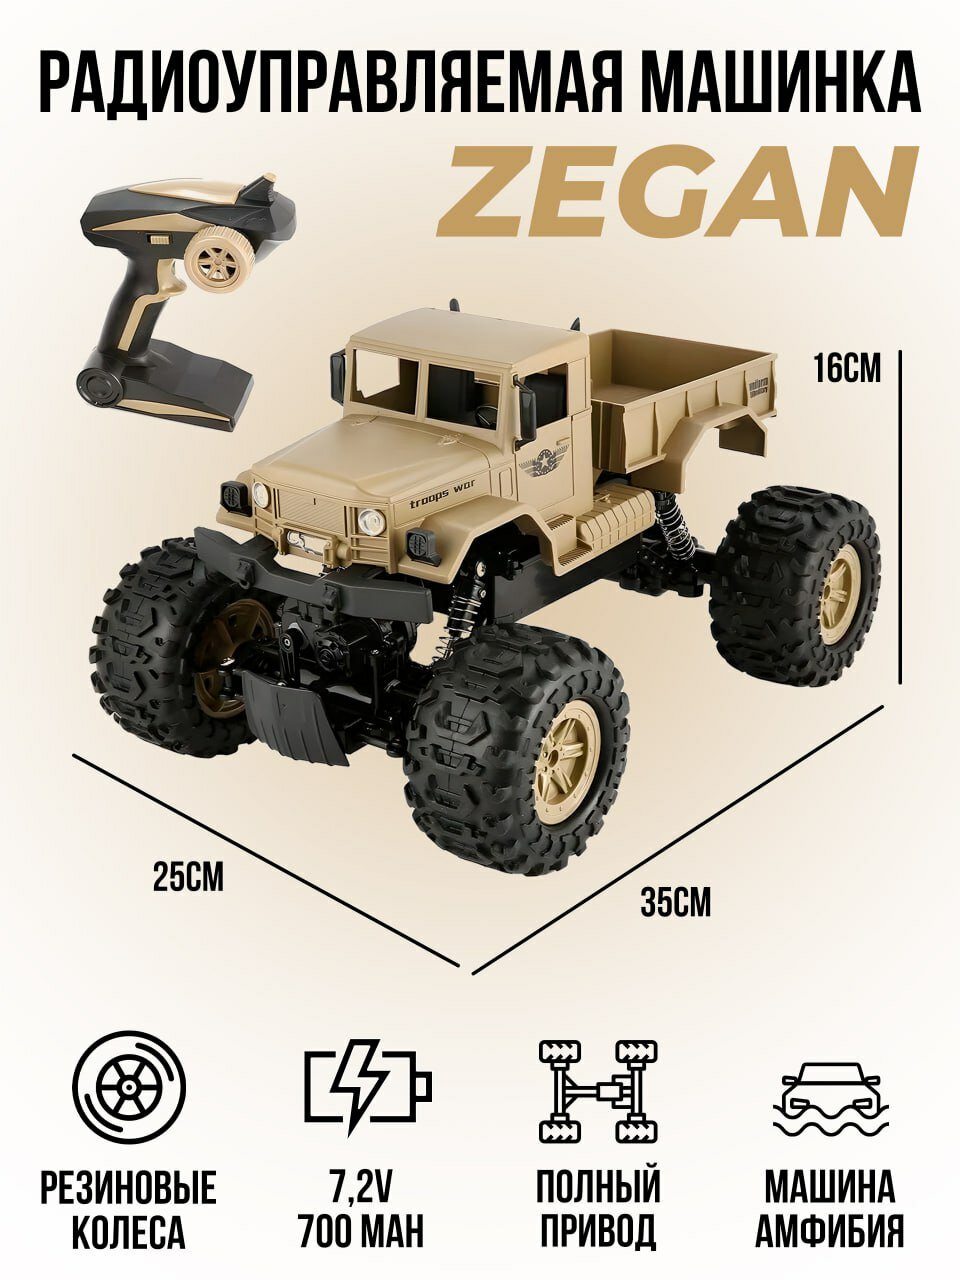 Радиоуправляемый краулер-амфибия Zegan 4WD RTR масштаб 1:12 2.4G